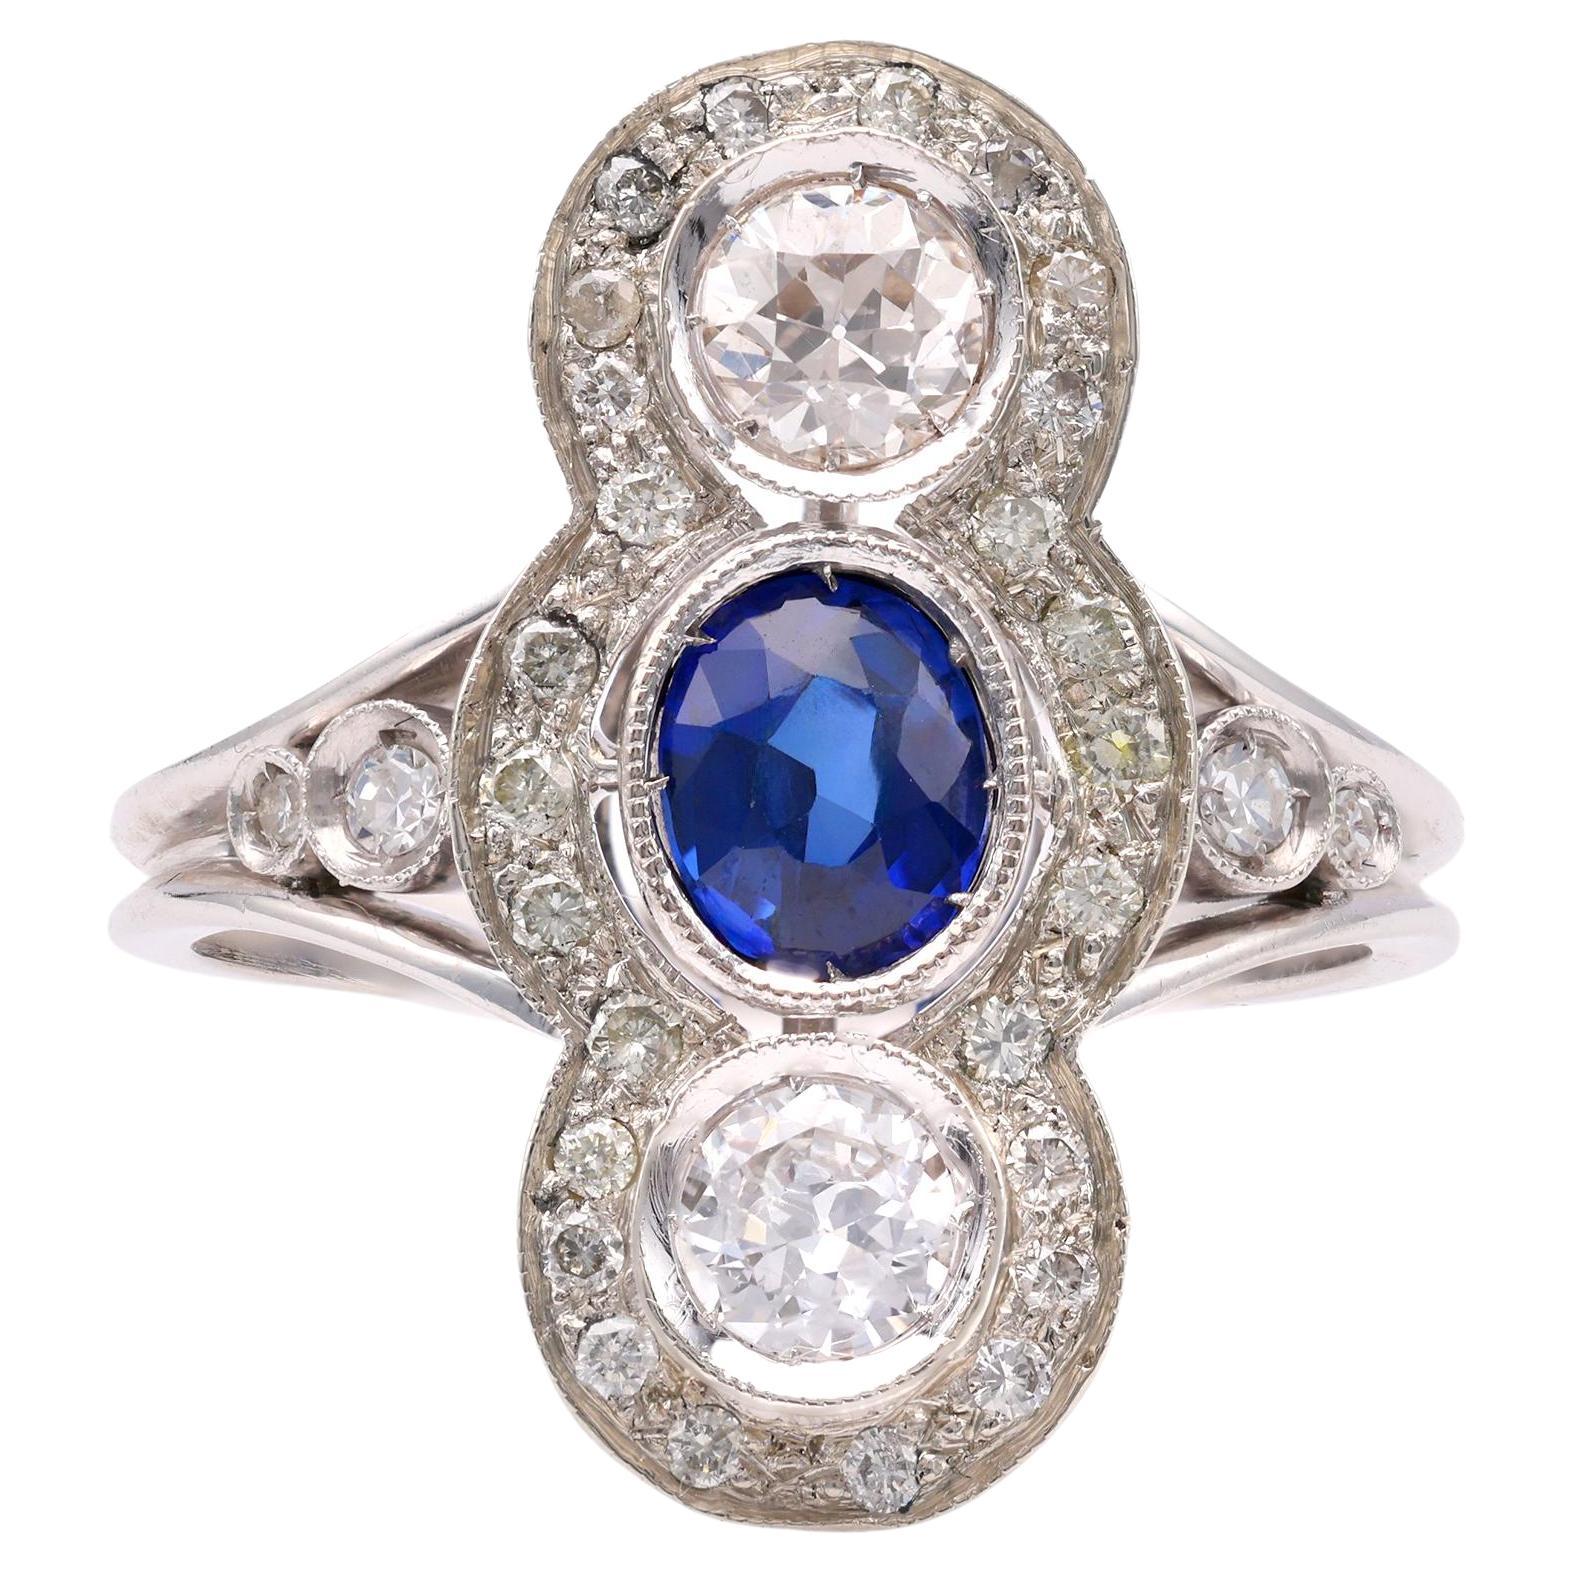 One Art Deco Revival Sapphire Diamond 18k White Gold Ring For Sale